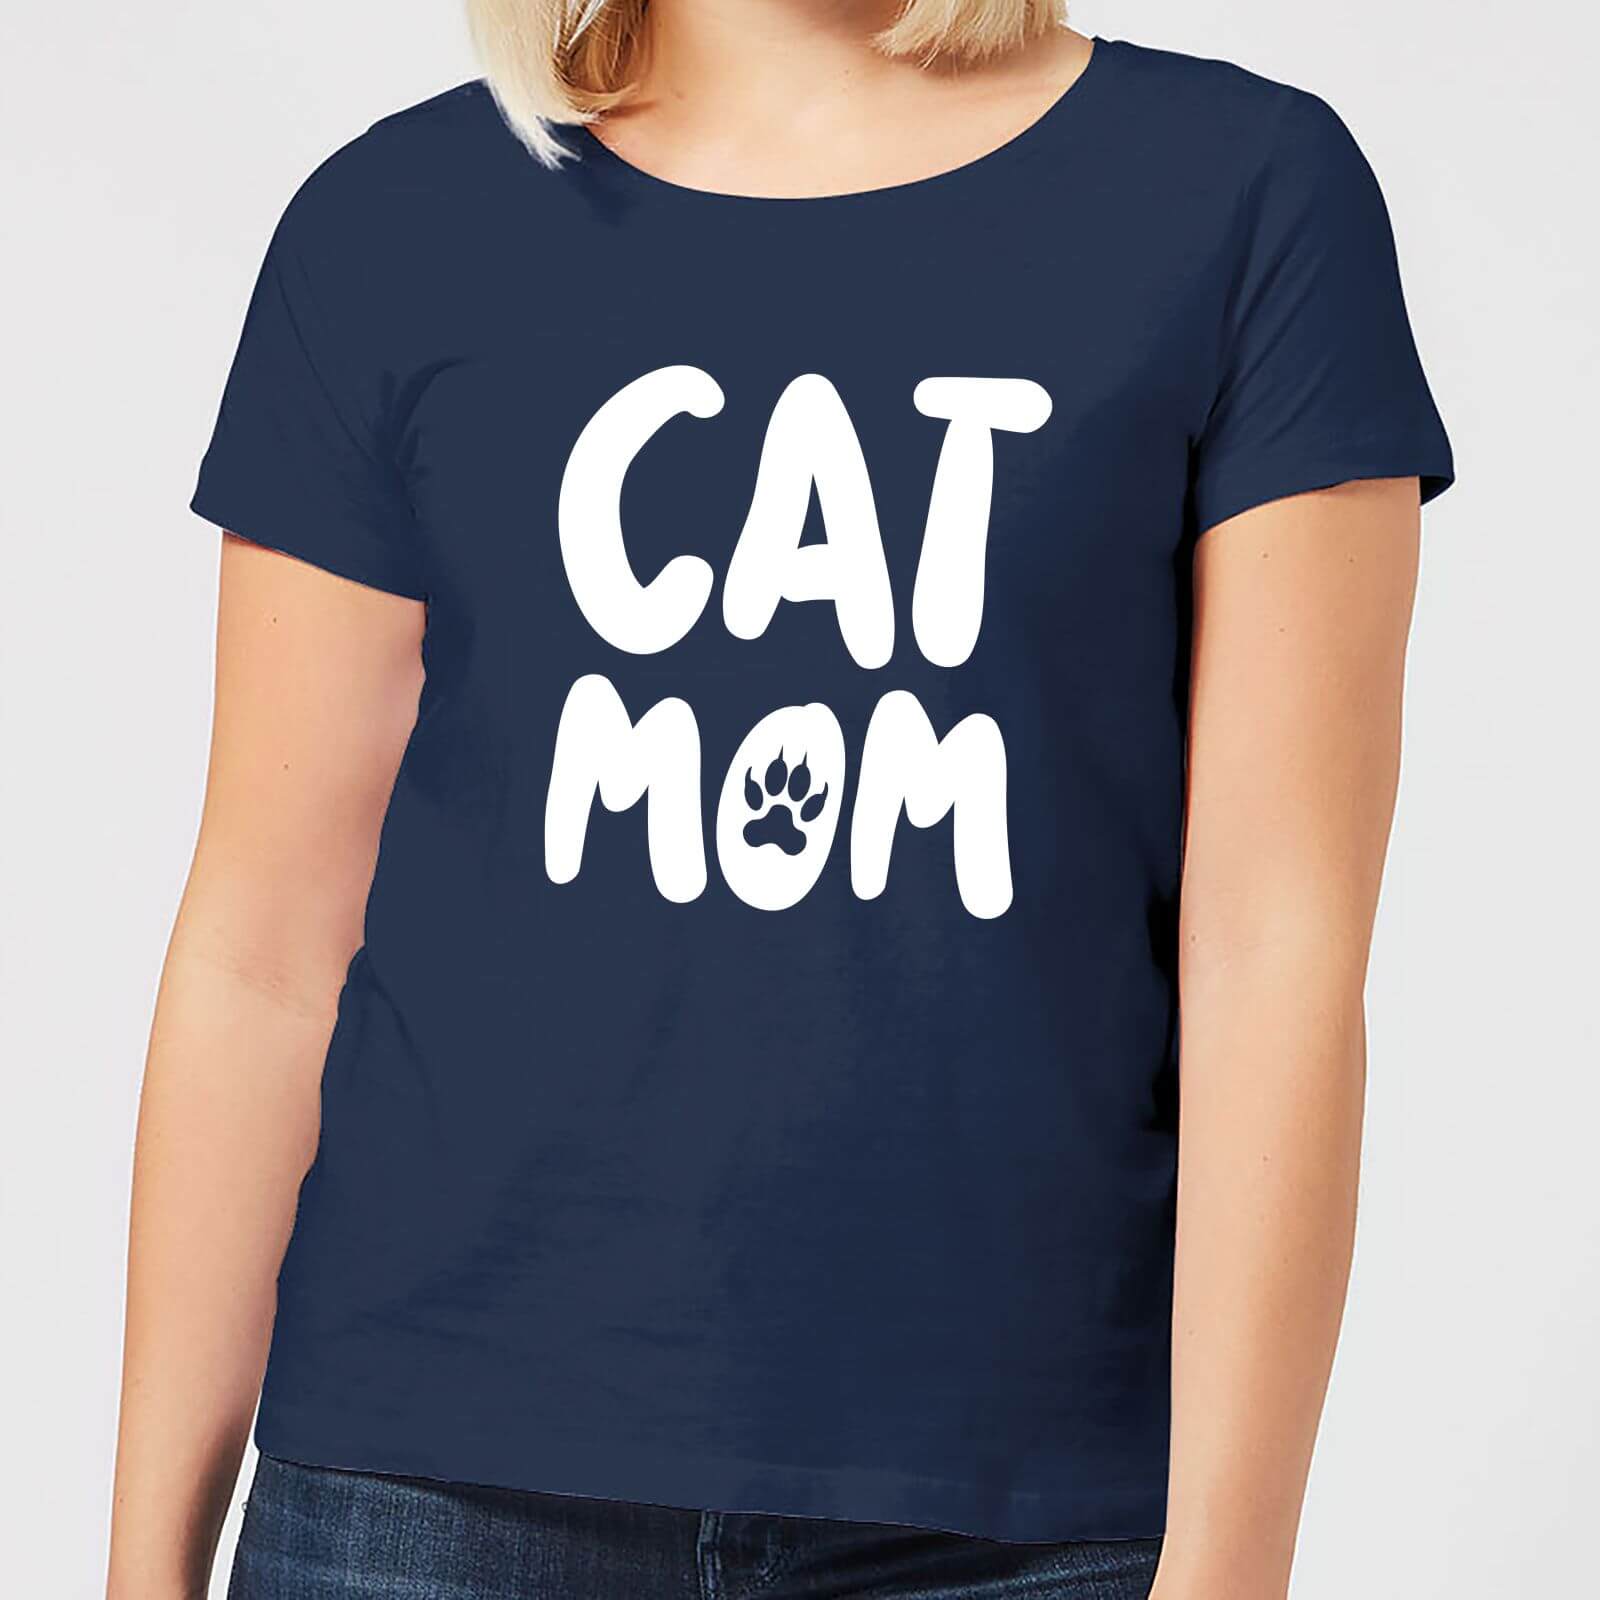 Cat Mom Women's T-Shirt - Navy - S - Navy